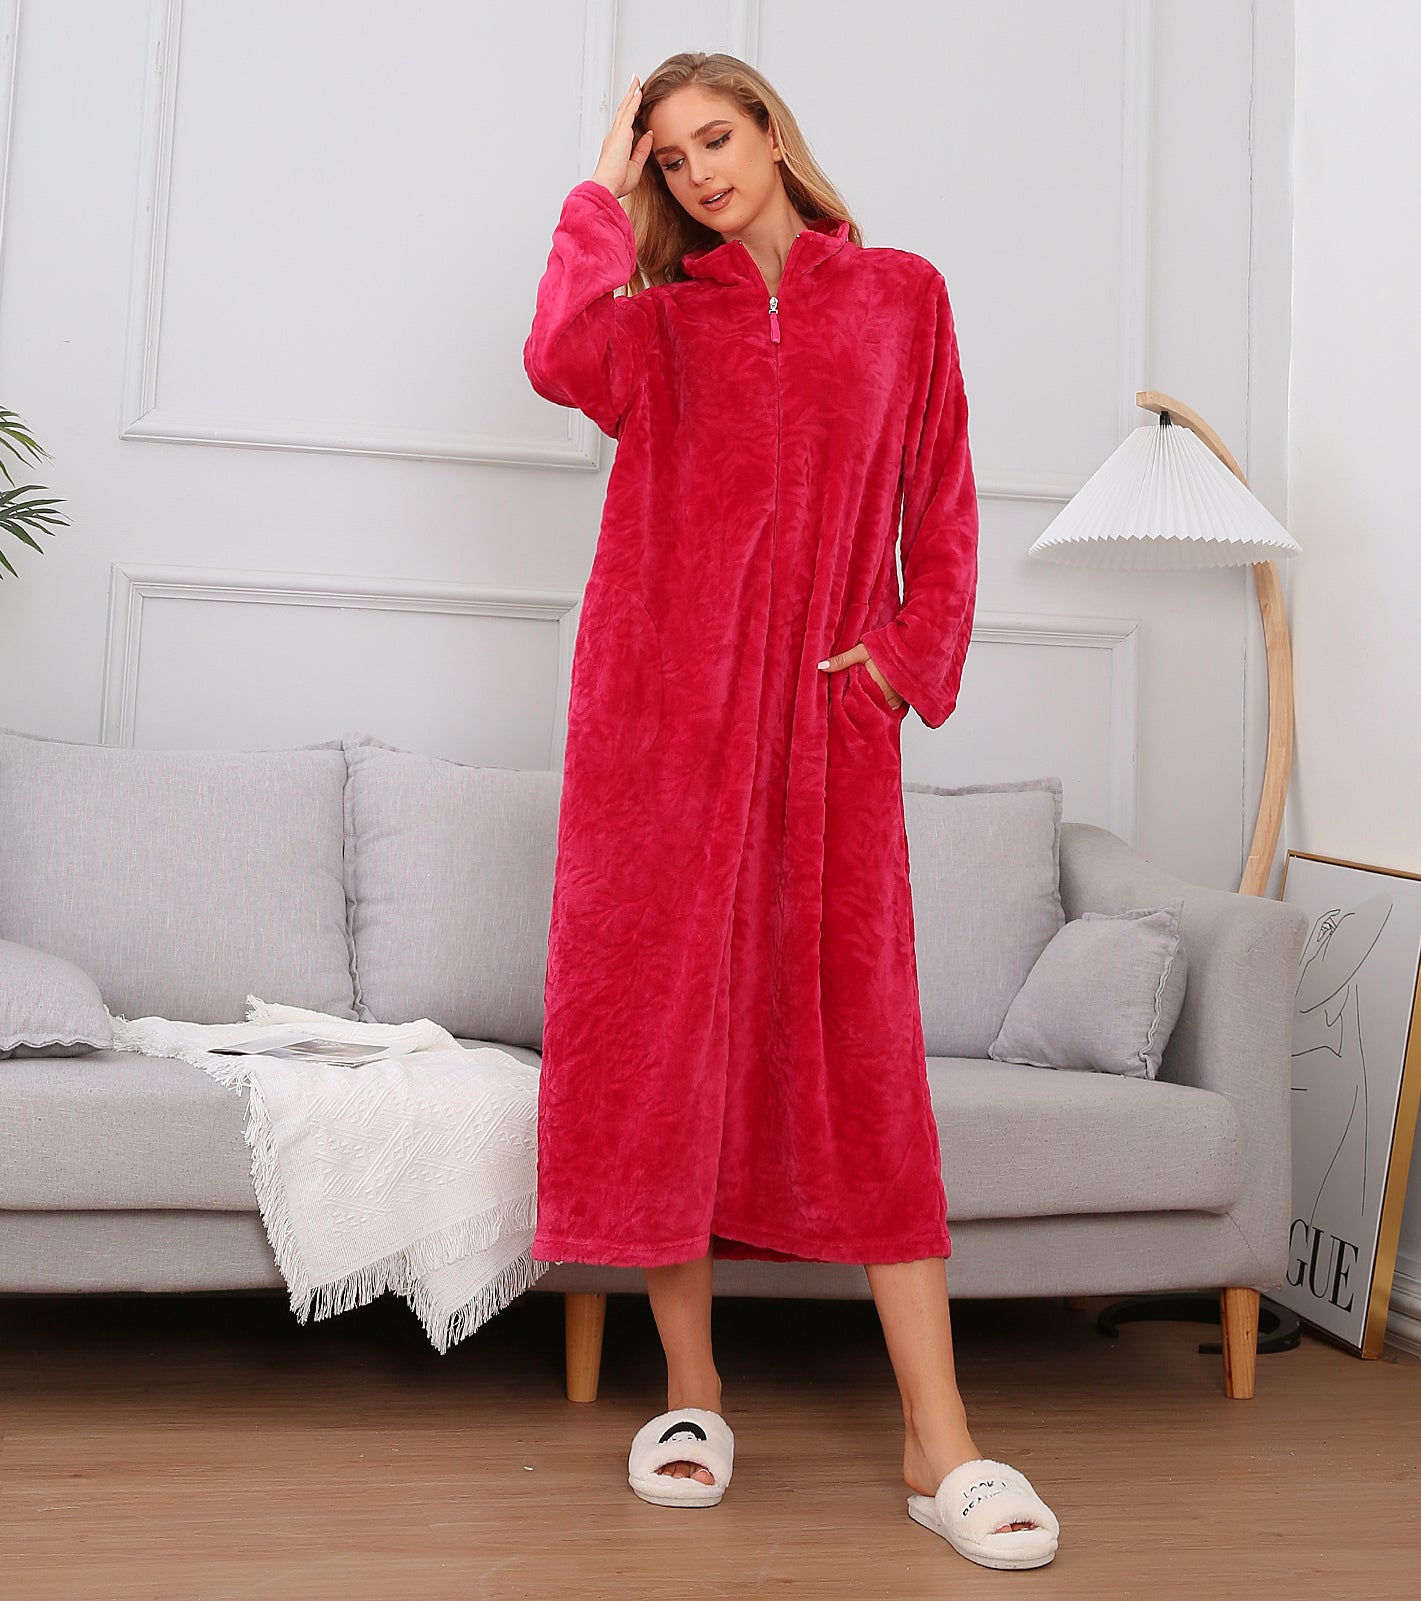 Women's Zip Up Plush Fleece Robe Hooded Warm Long Bathrobe